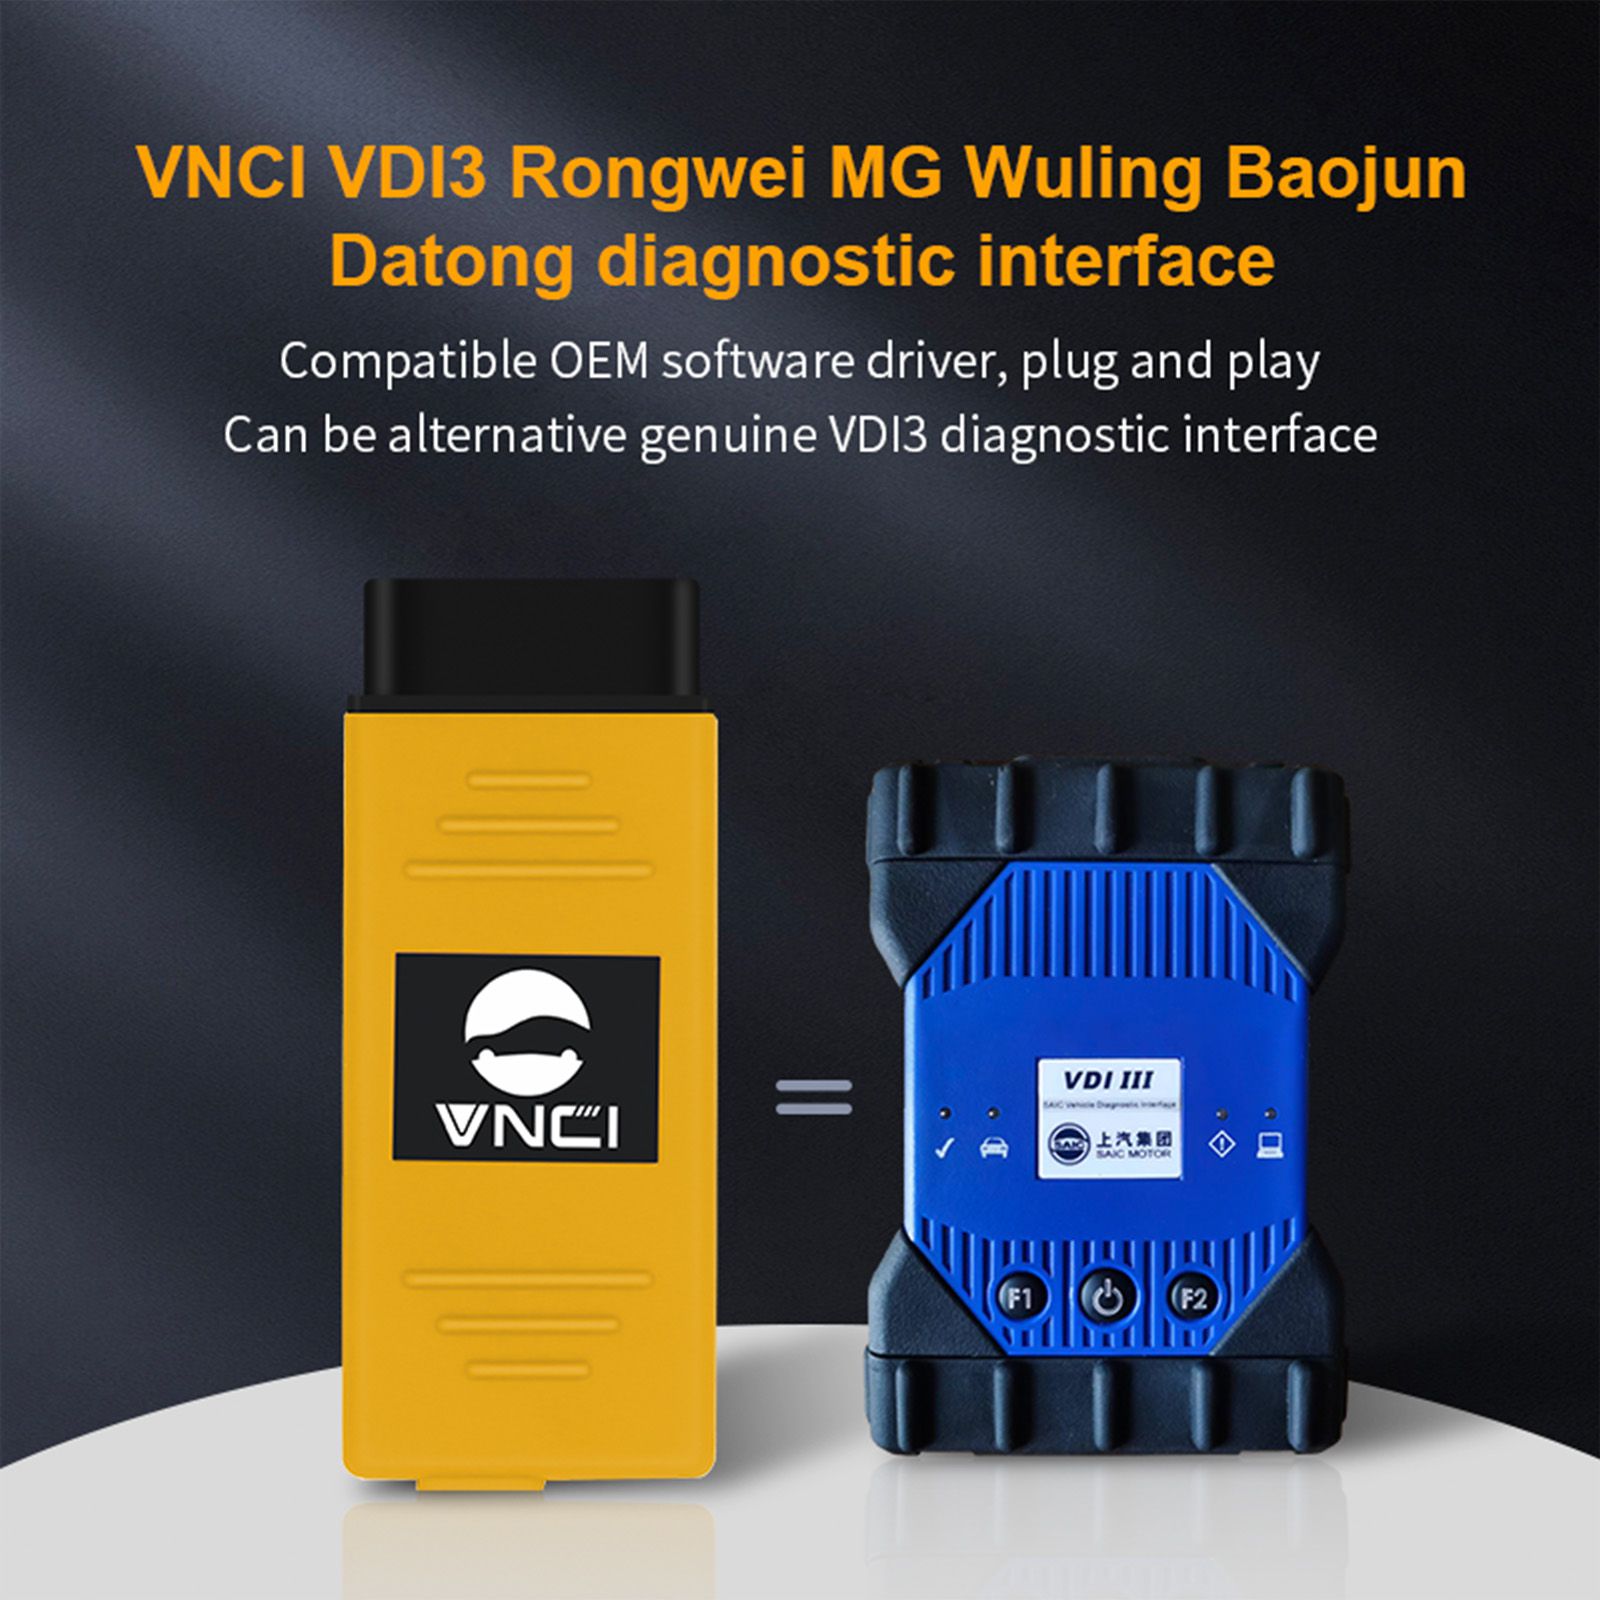 VNCI VDI3 Rongwei MG Wuling Baojun Datong Diagnostic Interface Compatible with OEM Software Driver, Plug and Play